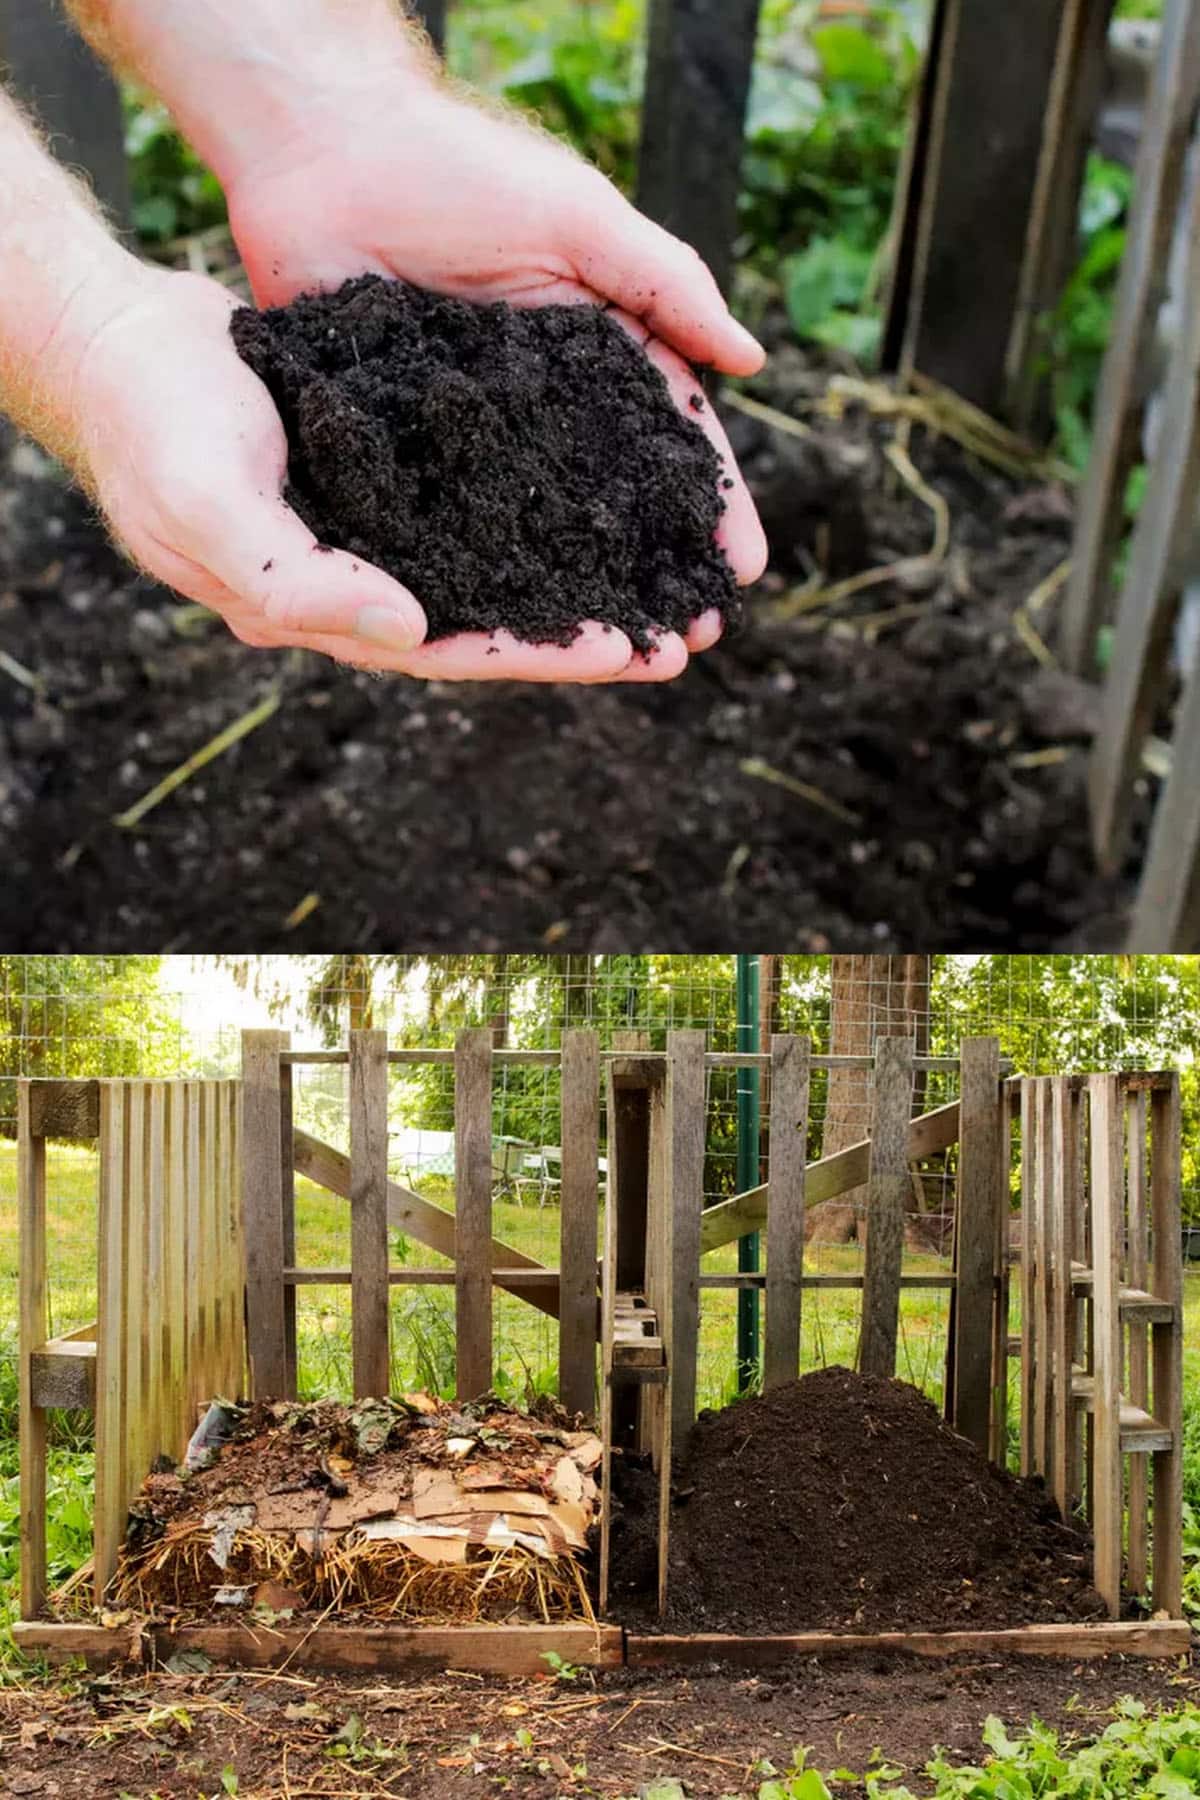 How To Make Compost Gardening Composting Methods Systems Bins Ideas Vermicompost Tea Worm Bin Hot Pile Hugelkultur Apieceofrainbow 12 